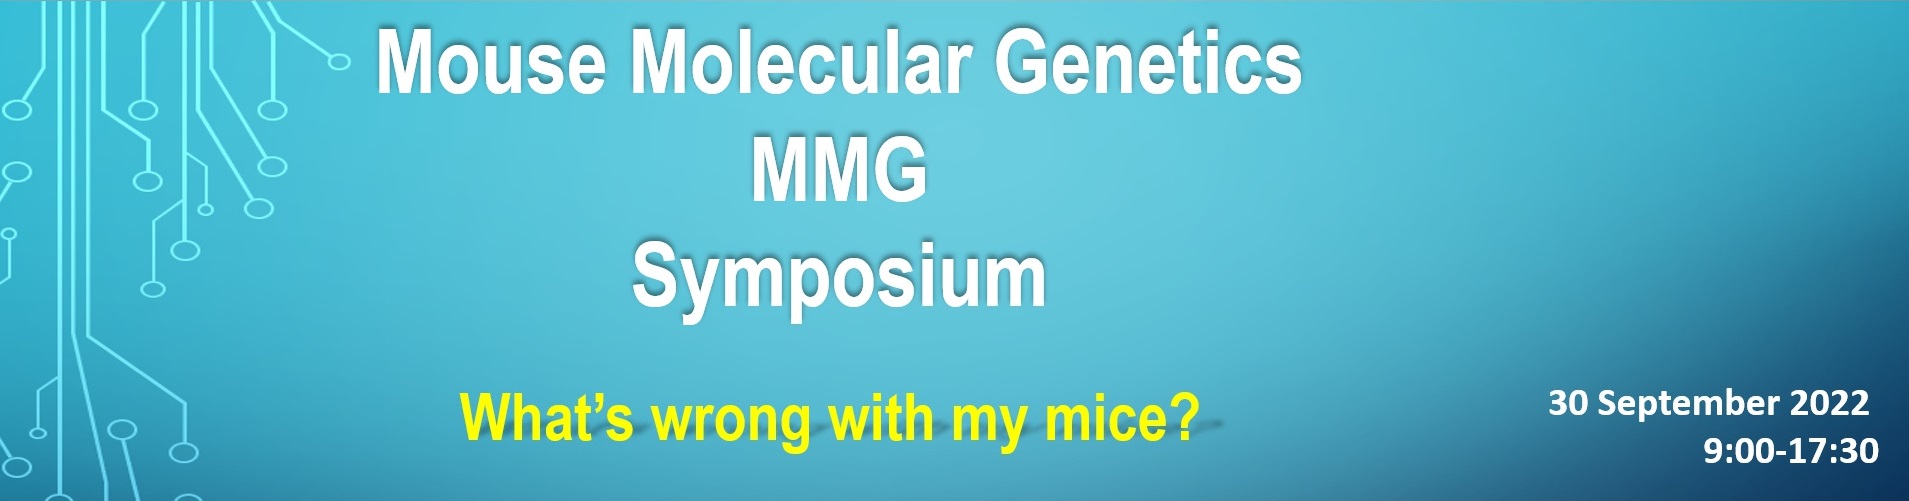 MMG Symposium